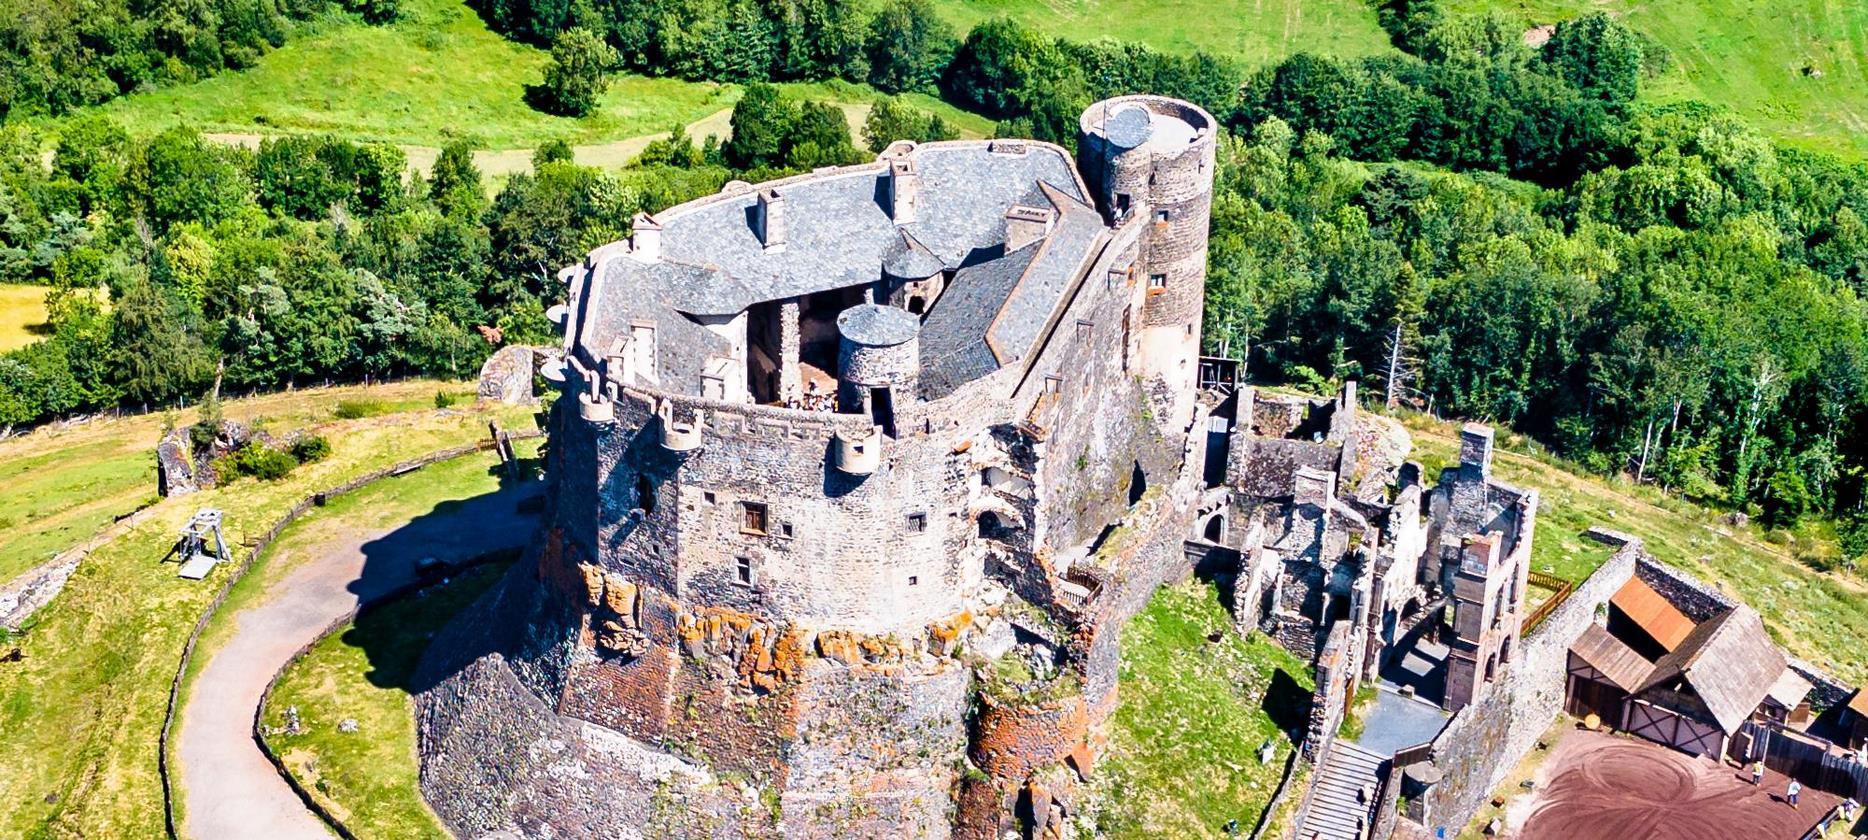 Vur Aerienne du chateau de Murol, chateau fort à Murol